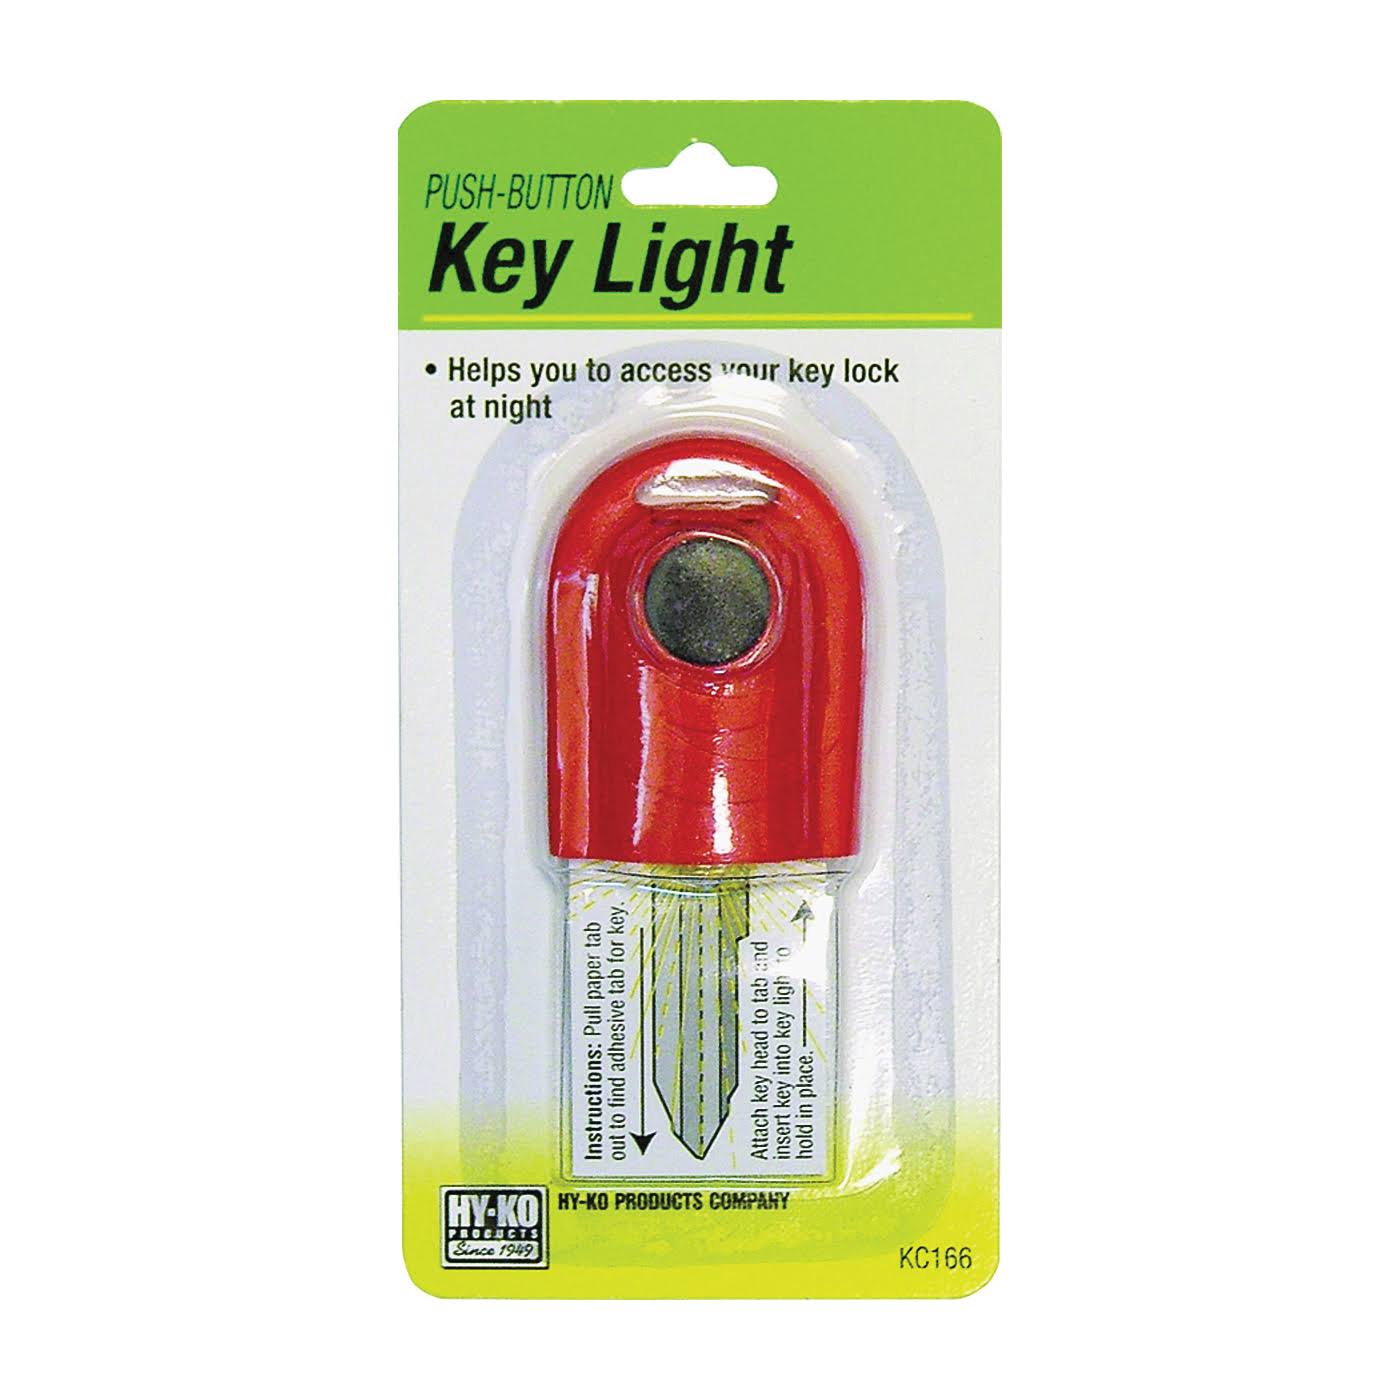 Hy-ko Products Key Light